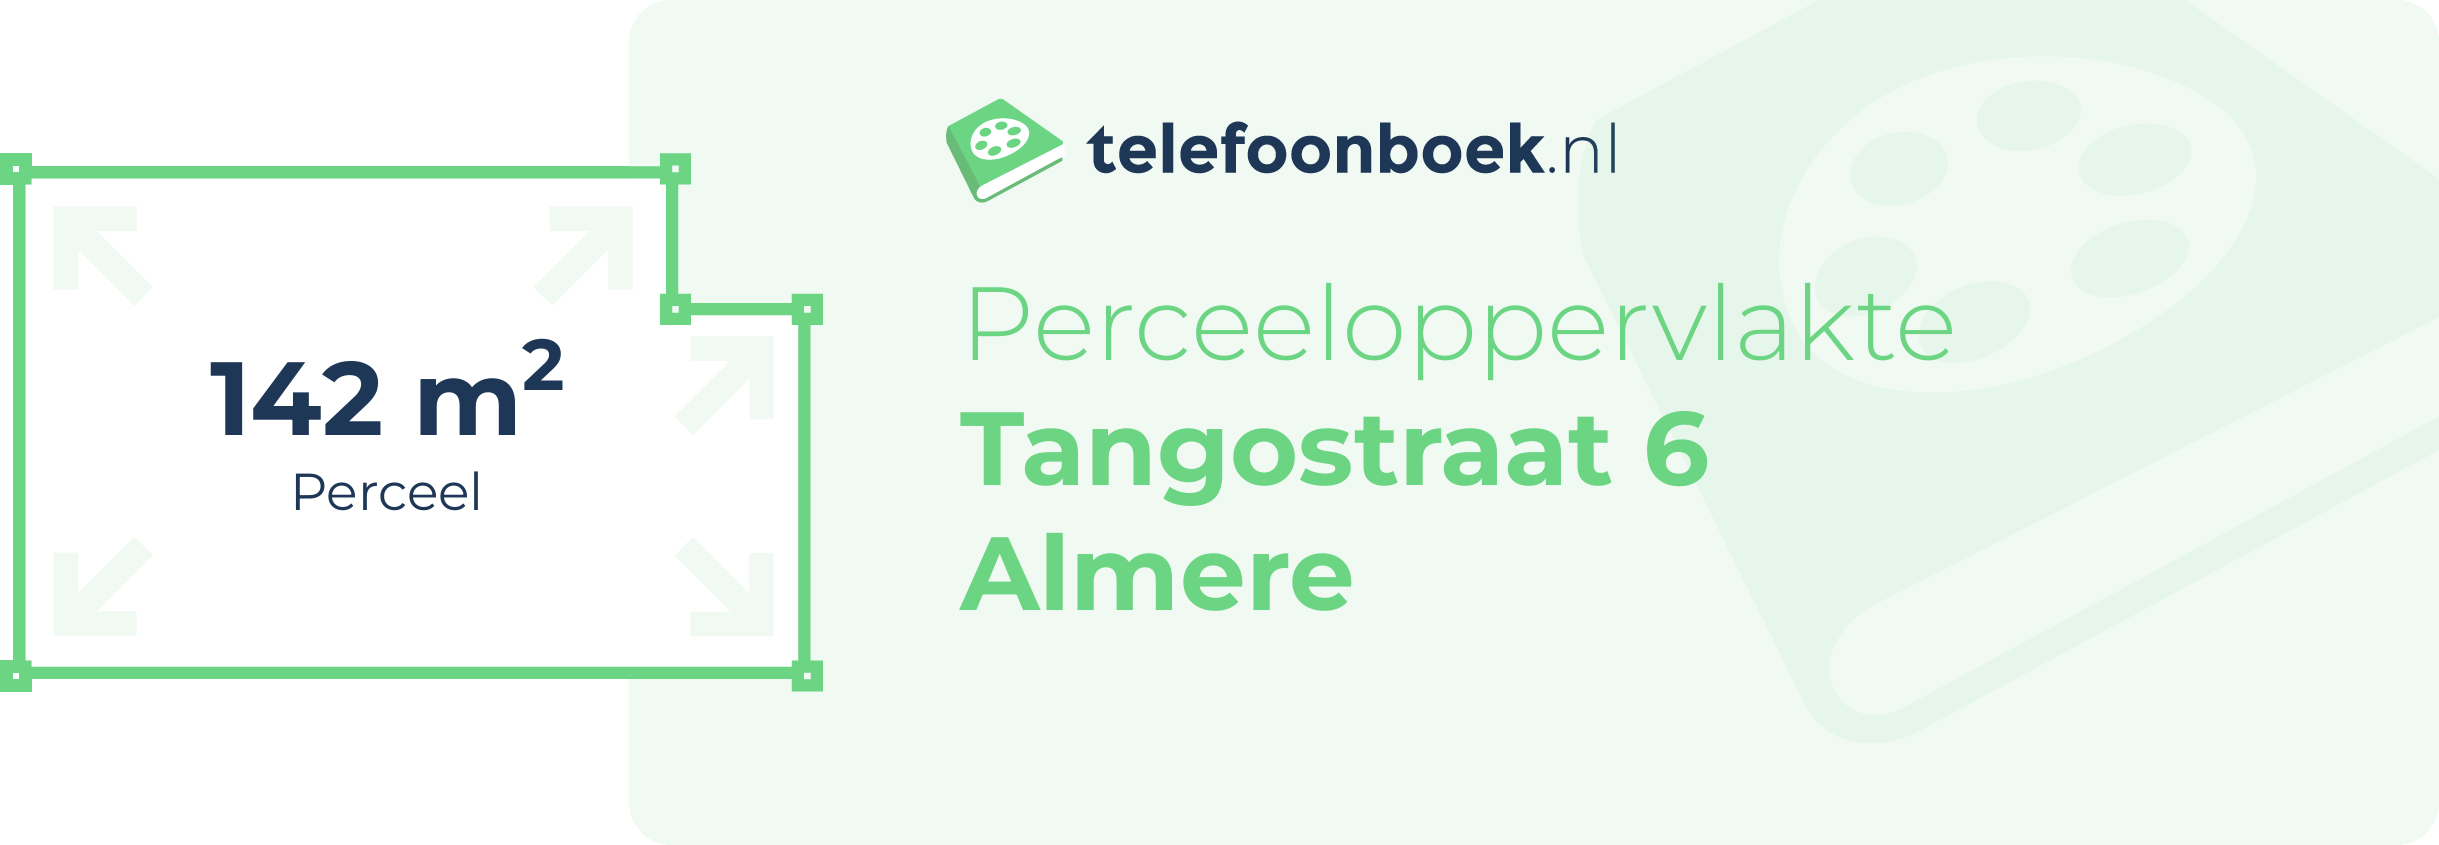 Perceeloppervlakte Tangostraat 6 Almere